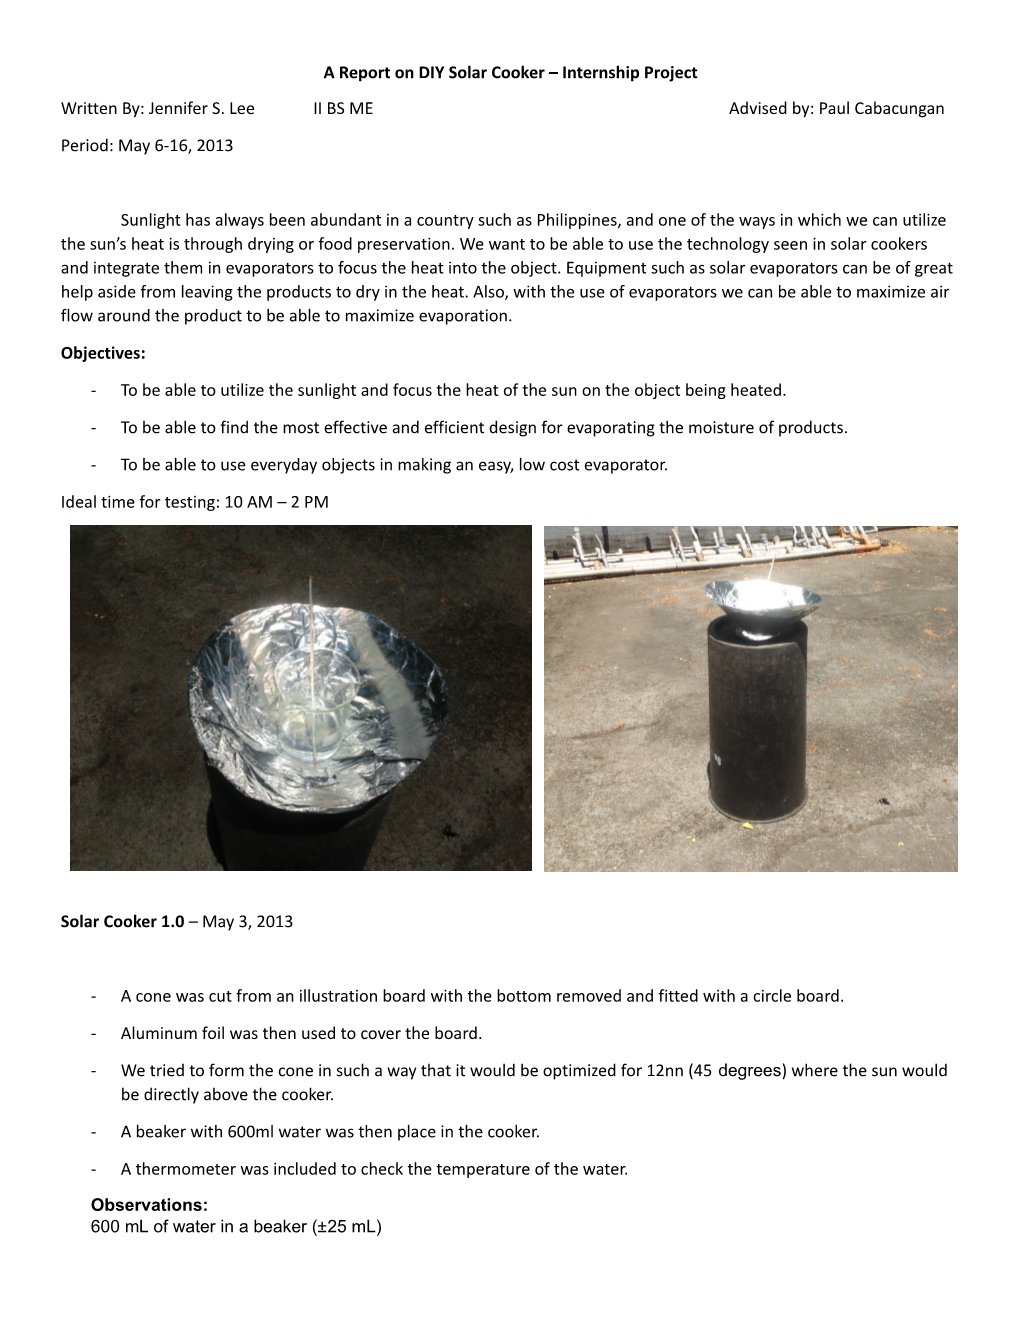 A Report on DIY Solar Cooker Internship Project